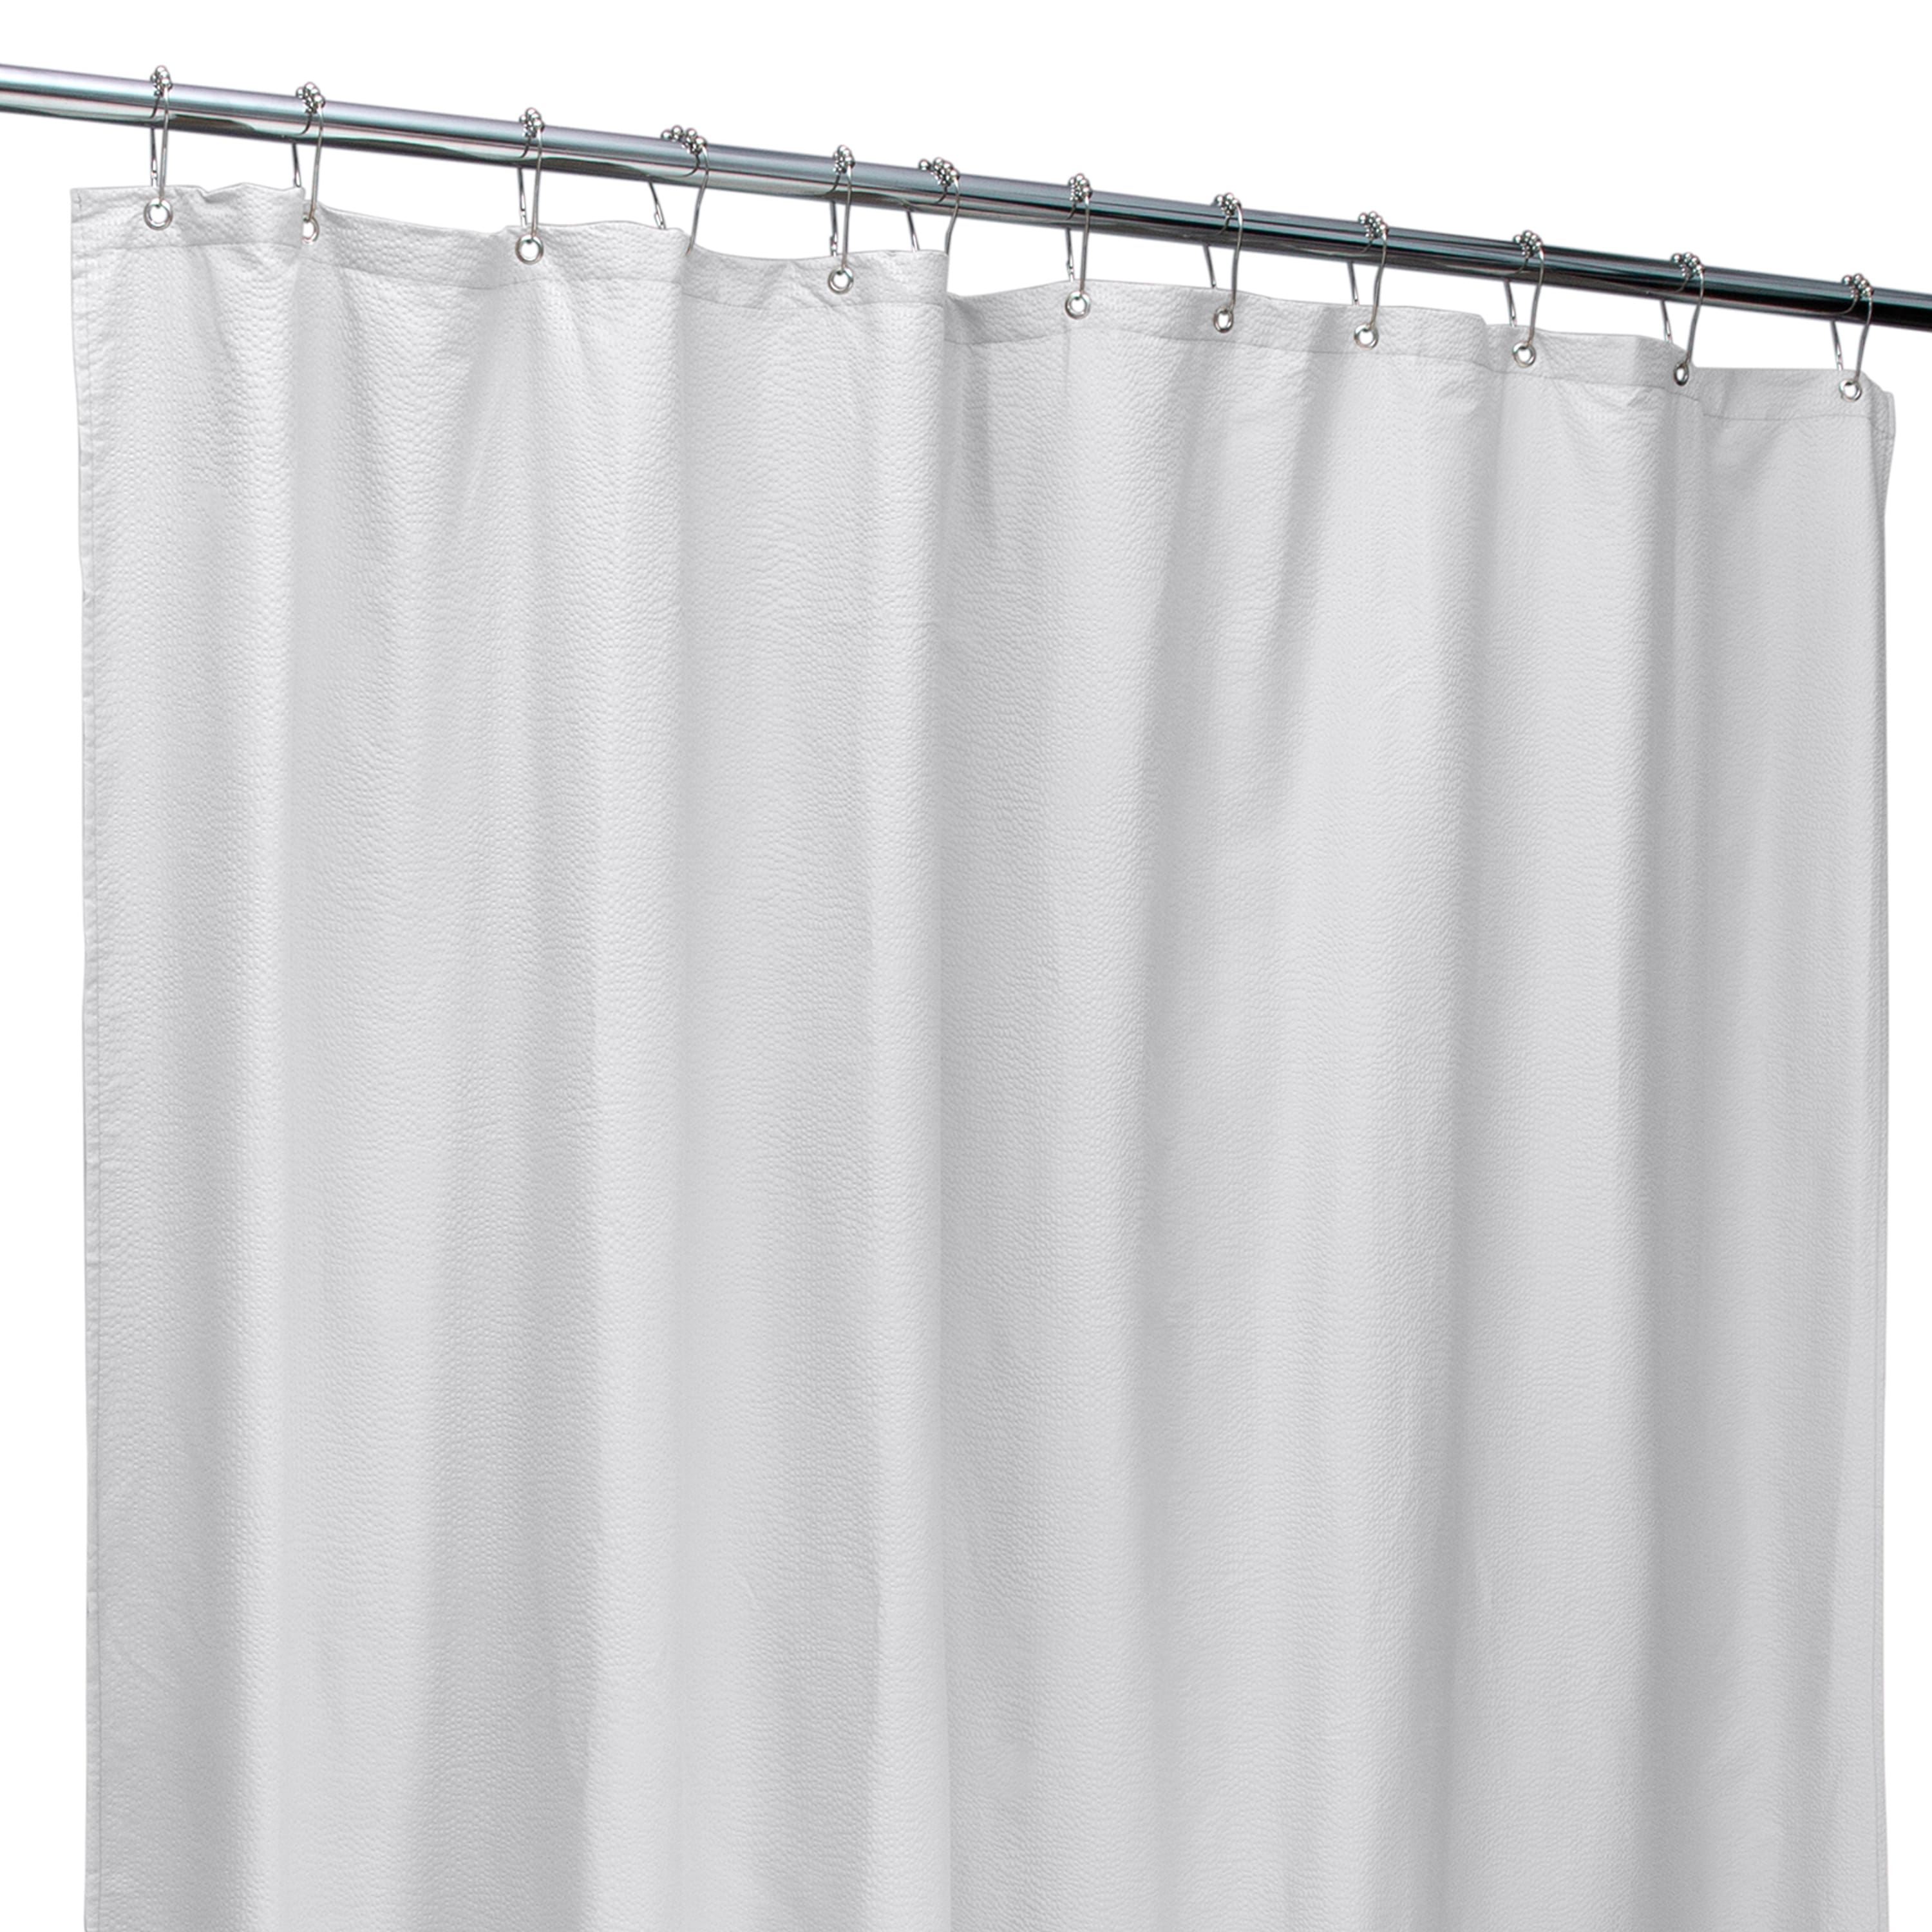 Bath Bliss White Microfiber Soft Touch Seersucker Design Shower Curtain Liner